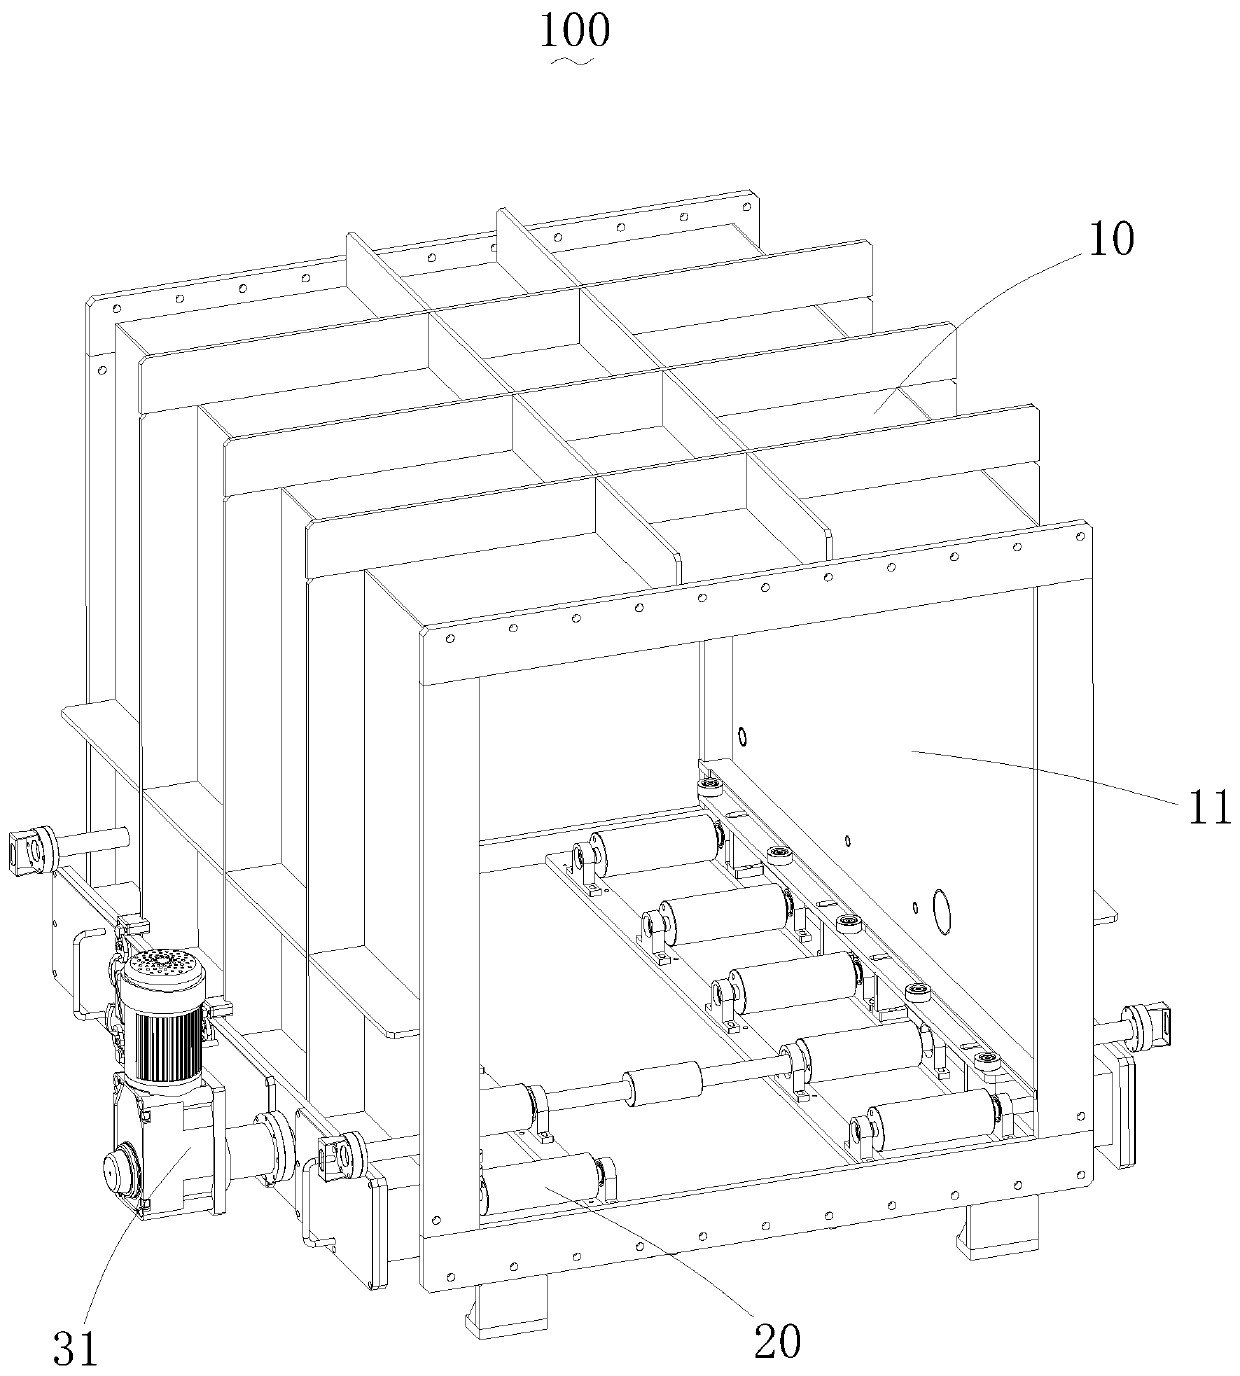 Novel vacuum drying tunnel furnace body structure and tunnel type vacuum drying system